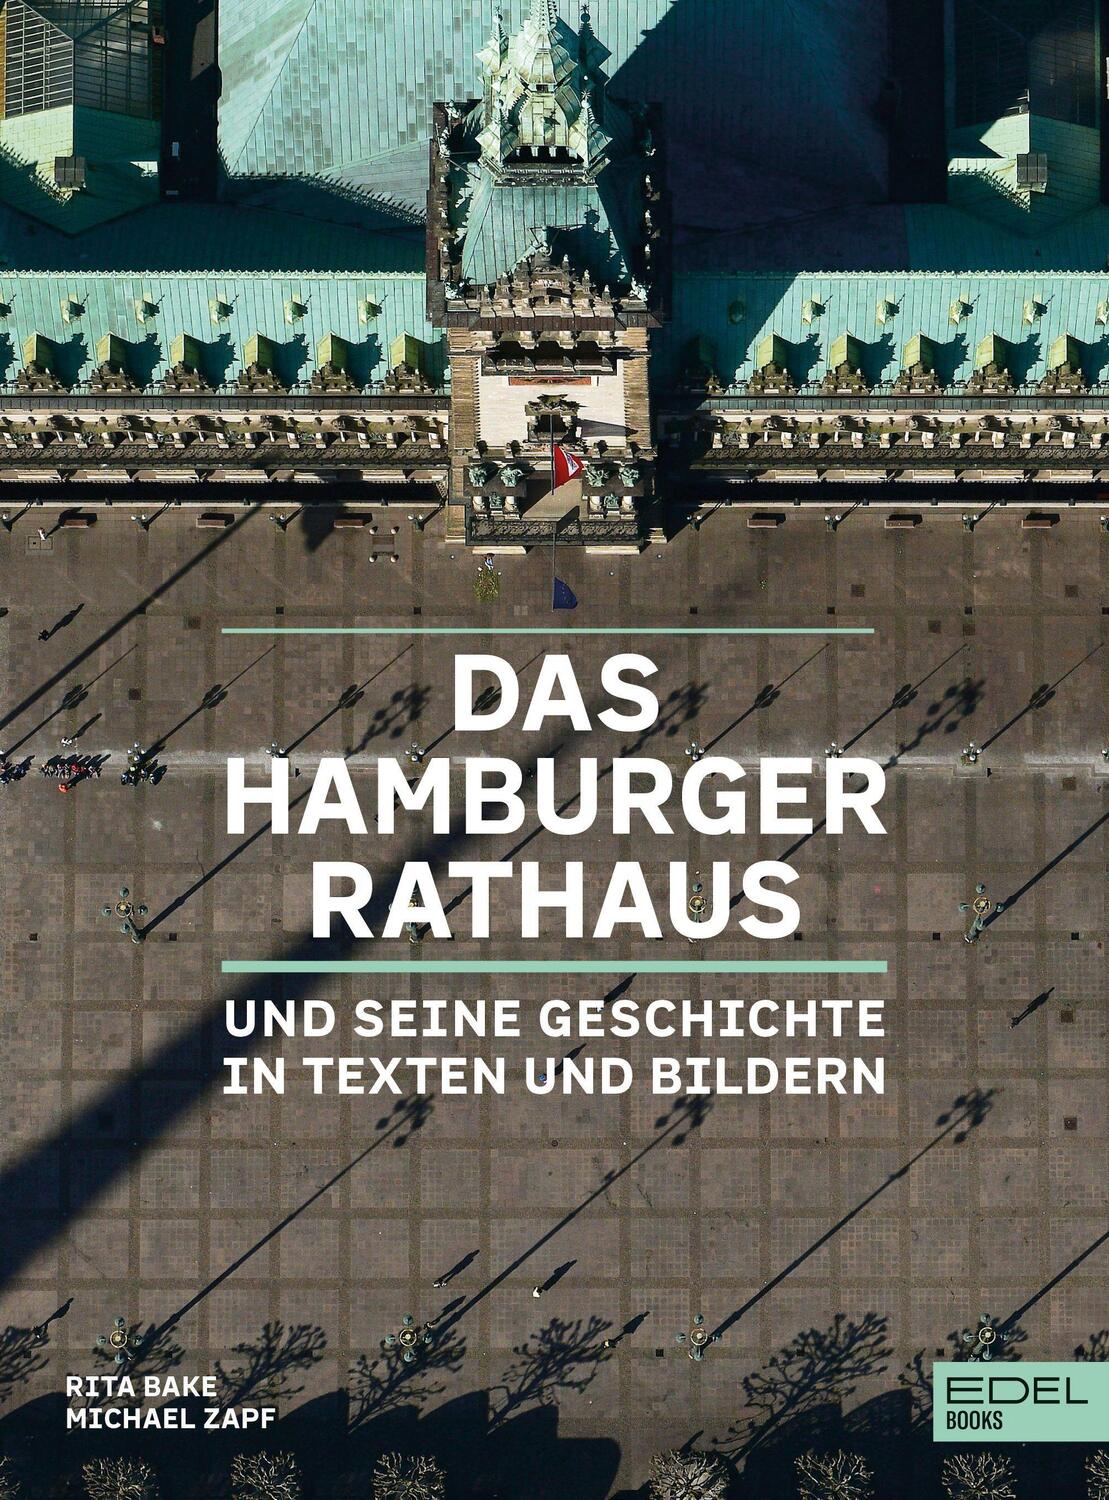 Cover: 9783841908315 | Das Hamburger Rathaus | 125 Jahre - 125 Geschichten | Bake (u. a.)